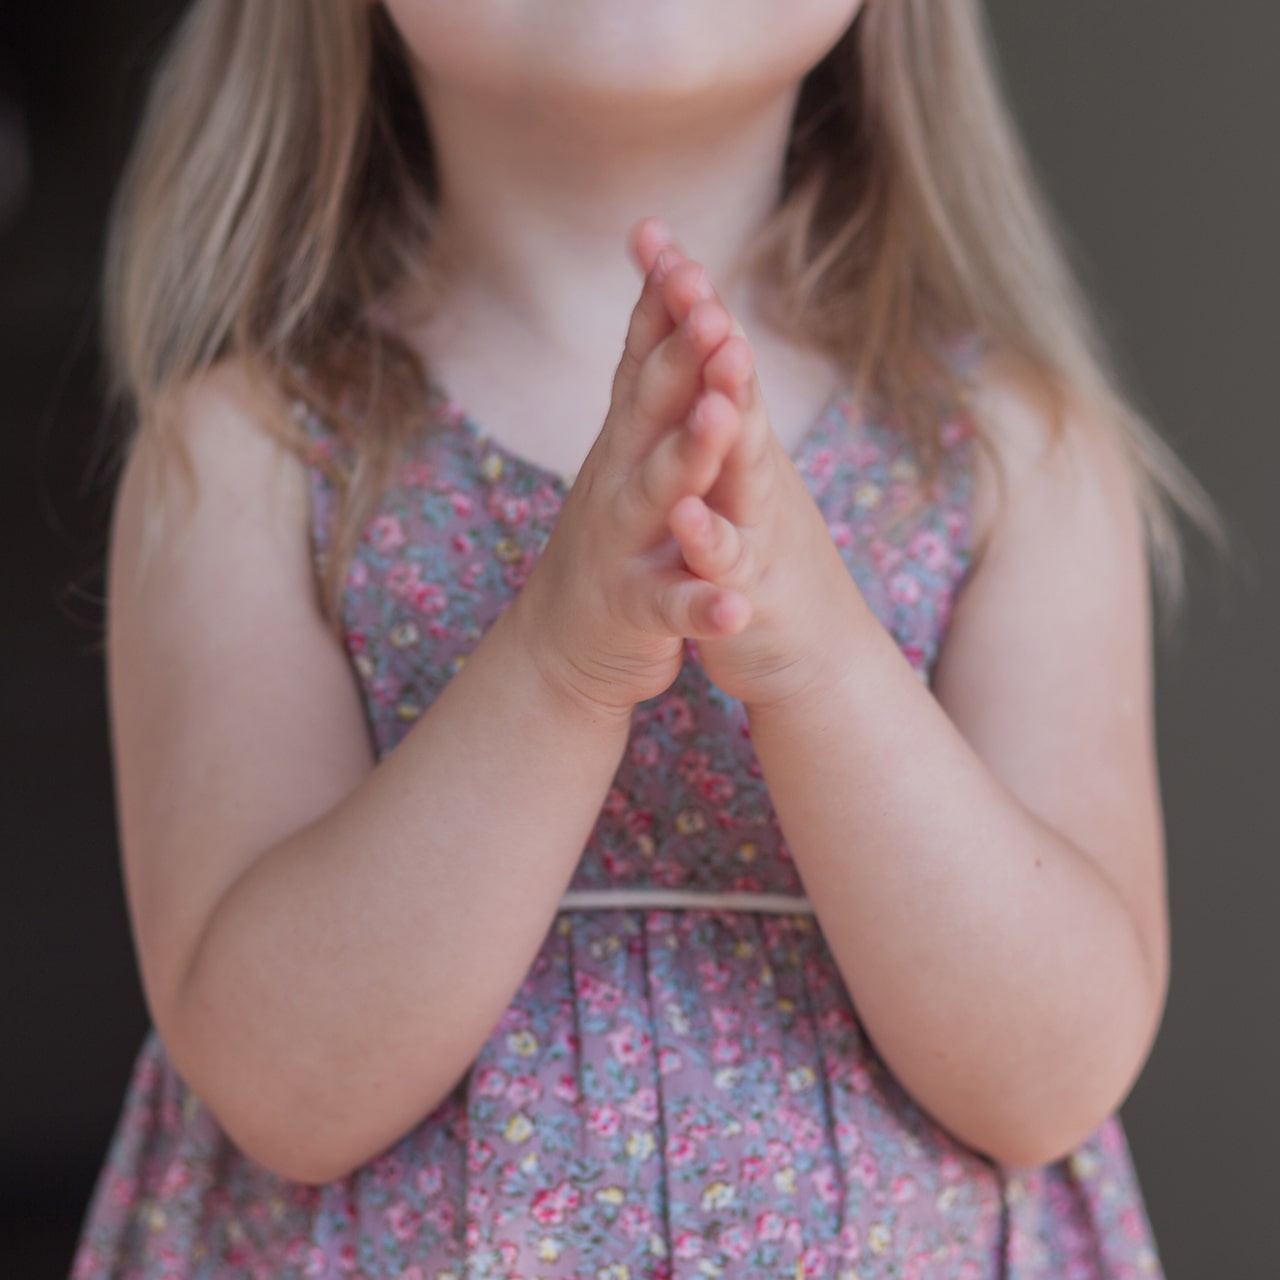 Child holding hands in prayer